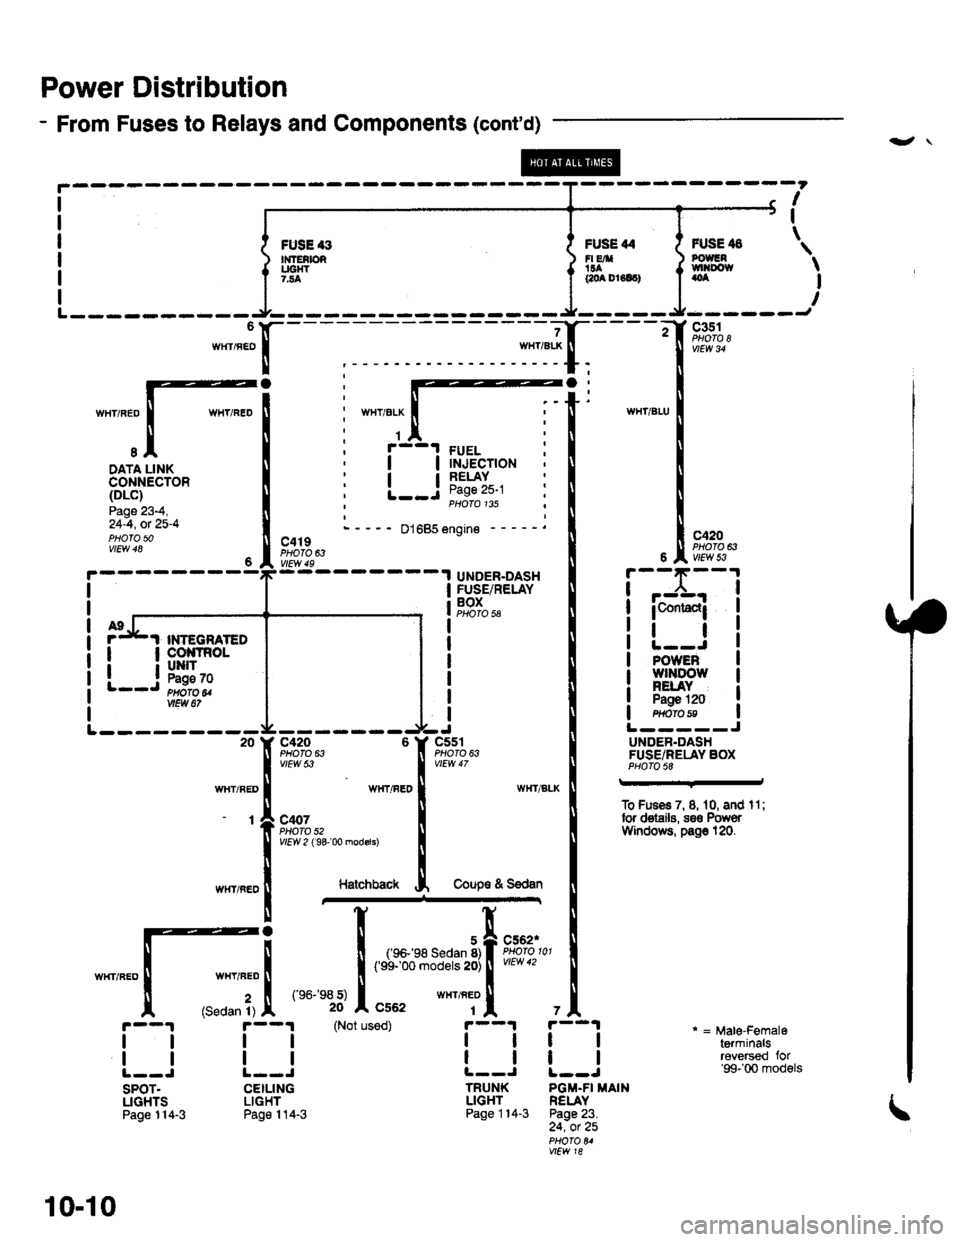 HONDA CIVIC 1999 6.G Service Manual Power Distribution
- From Fuses to Relays and Components (contd)
-",JX-
I
I
\FUSE 3n{fEtbRUC|{T7..4
FUSE 44FI EA!aacoa Dr6lc)
FUSE il8POUGNtvtl|Do{taoa
c351
c420PHOTO 63
I-.:CrJ
WIIT/ELX
1
I
I
I
I